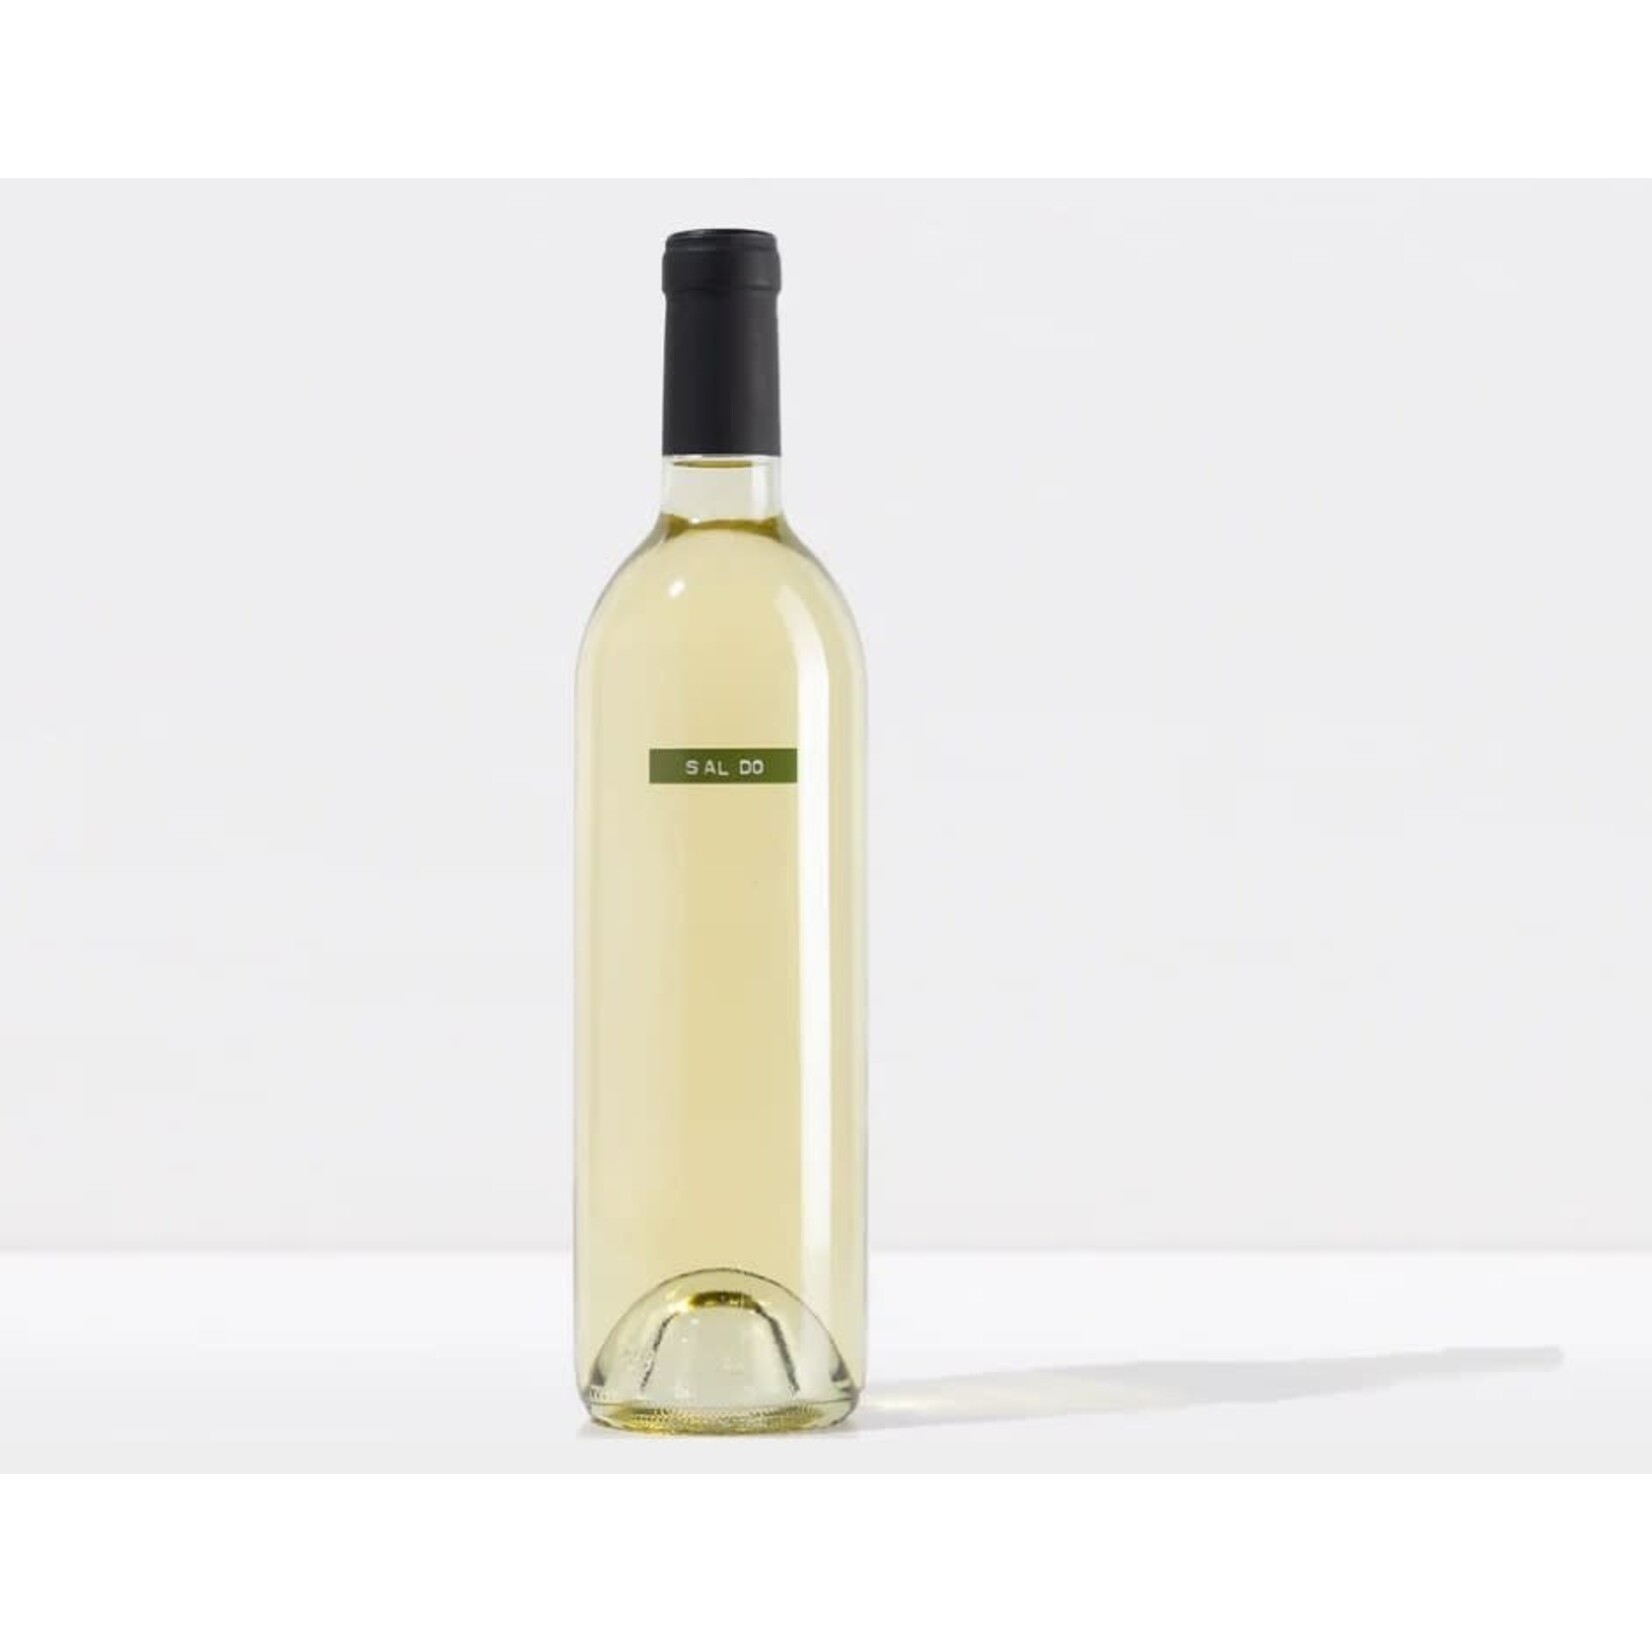 The Prisoner Wine Company Saldo Chenin Blanc California 2021